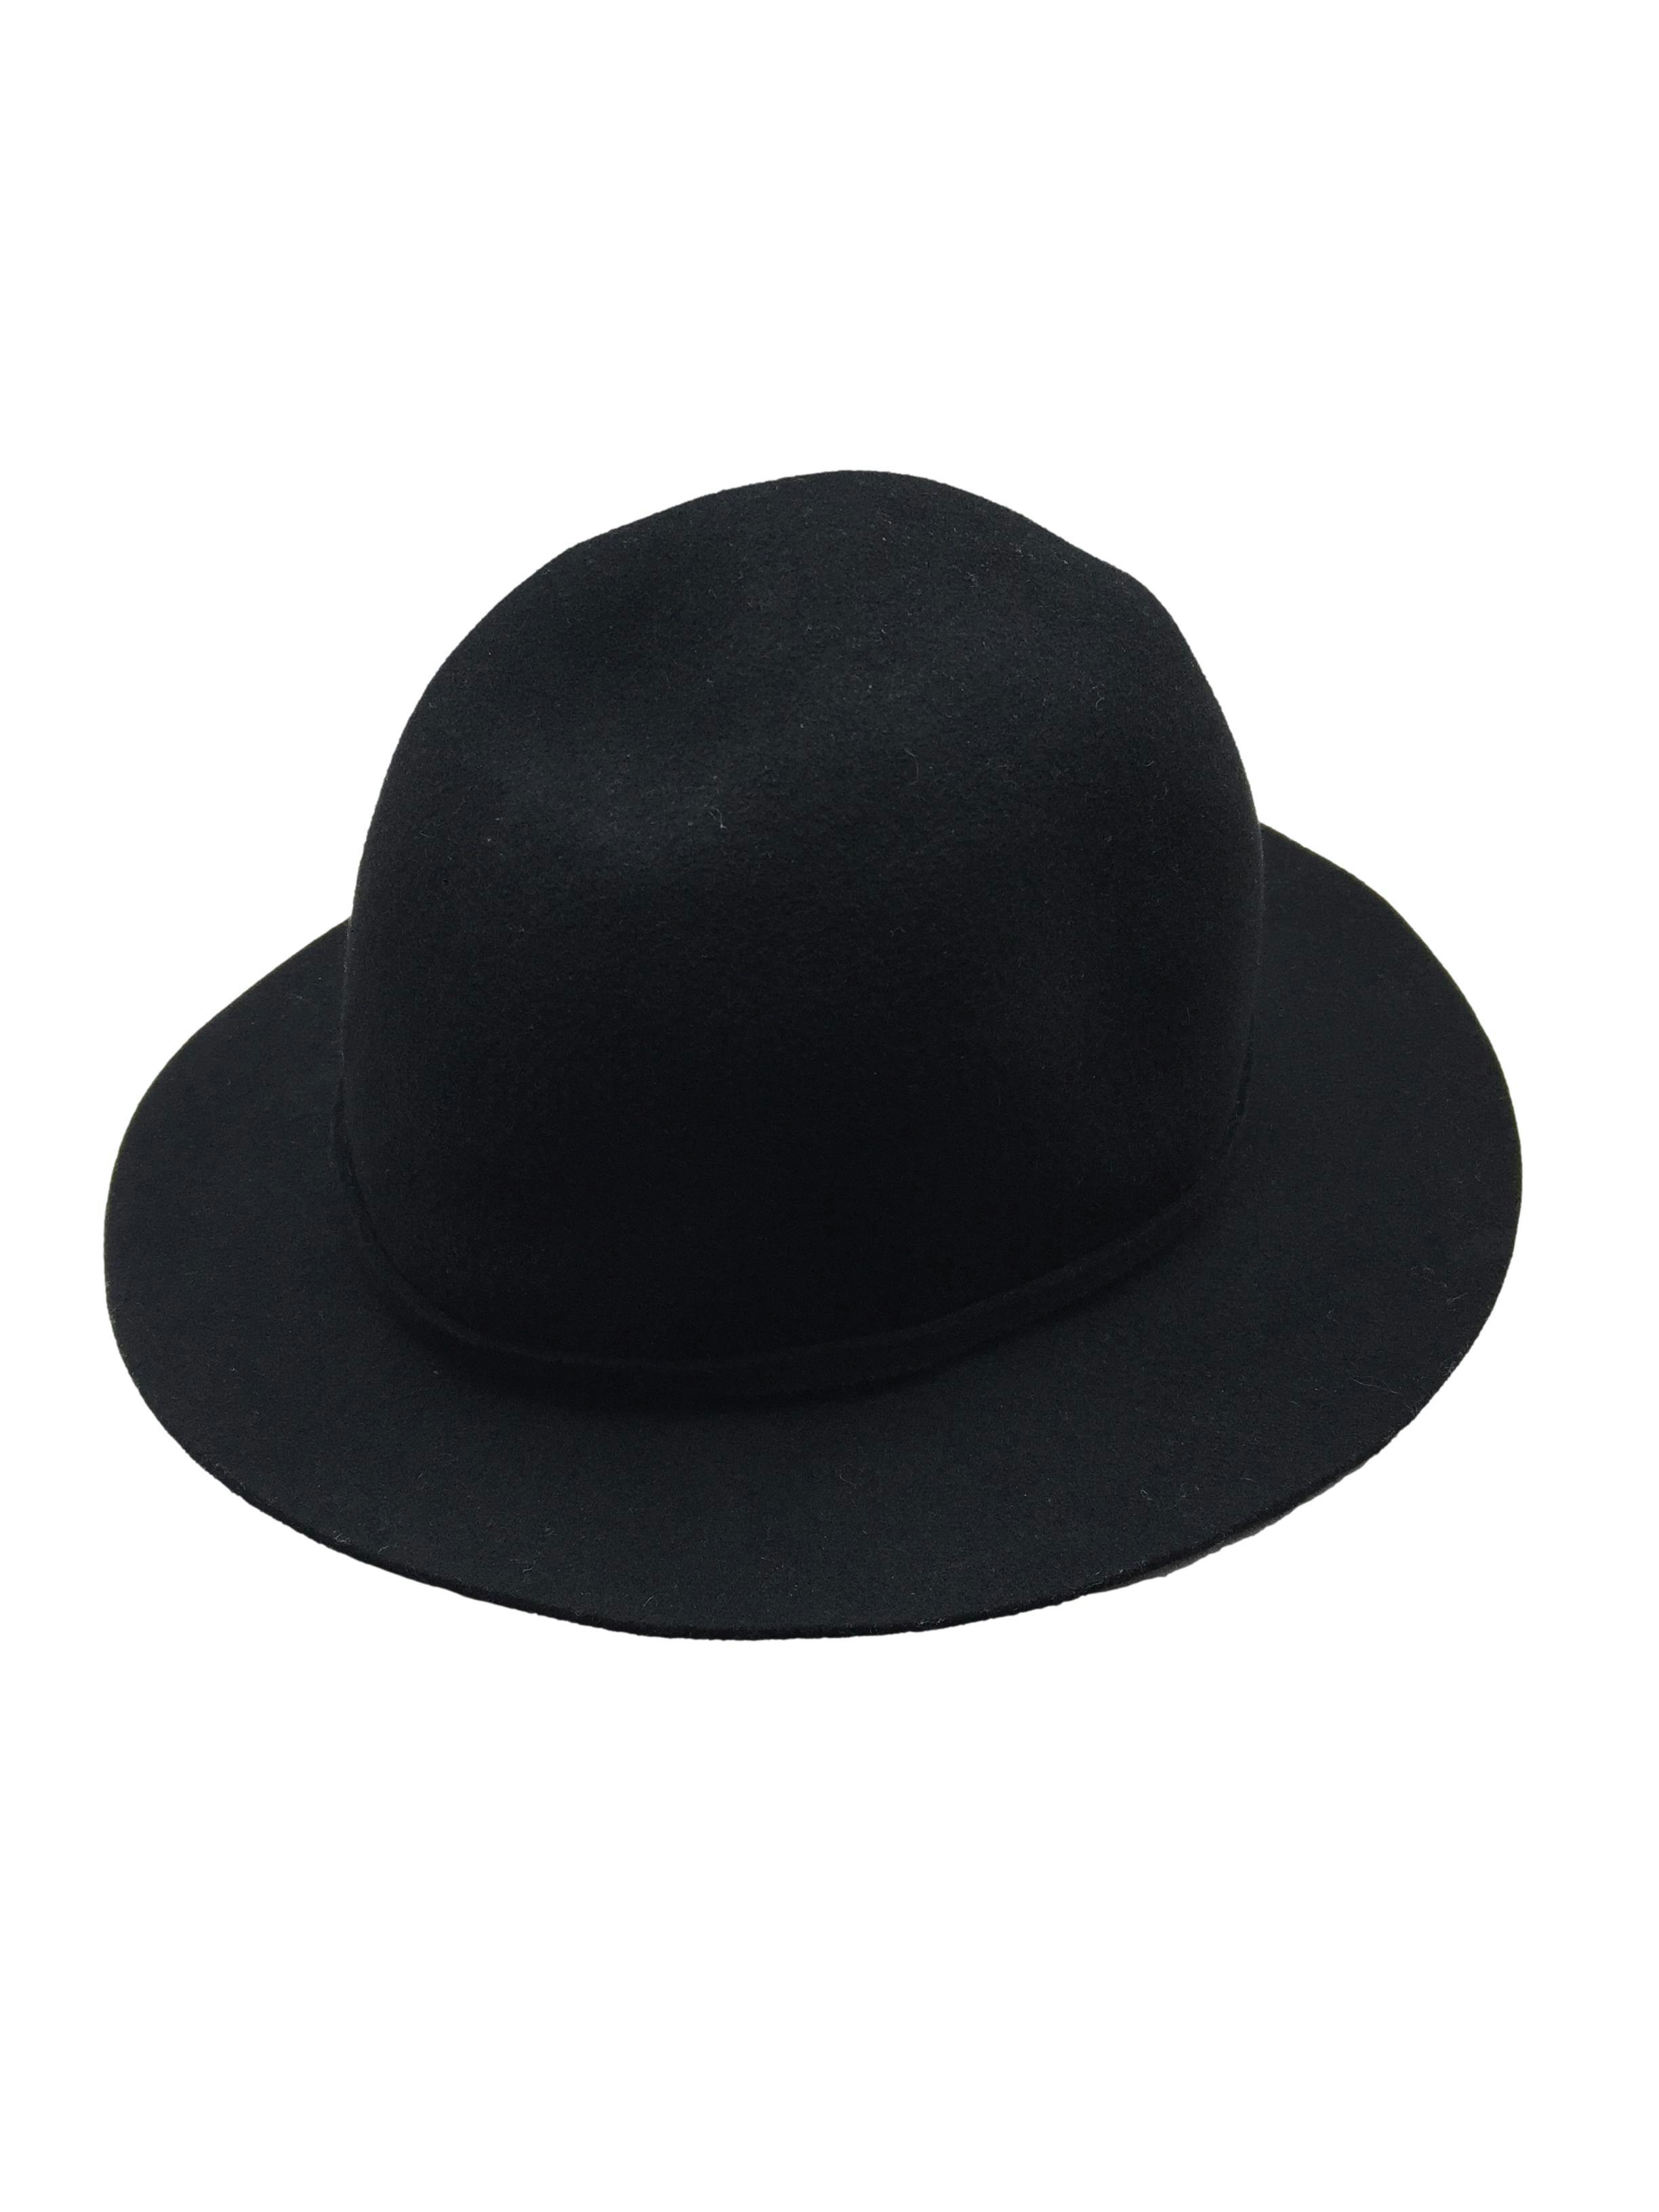 Sombrero J.Crew negro de paño 100% lana, ala 6cm.